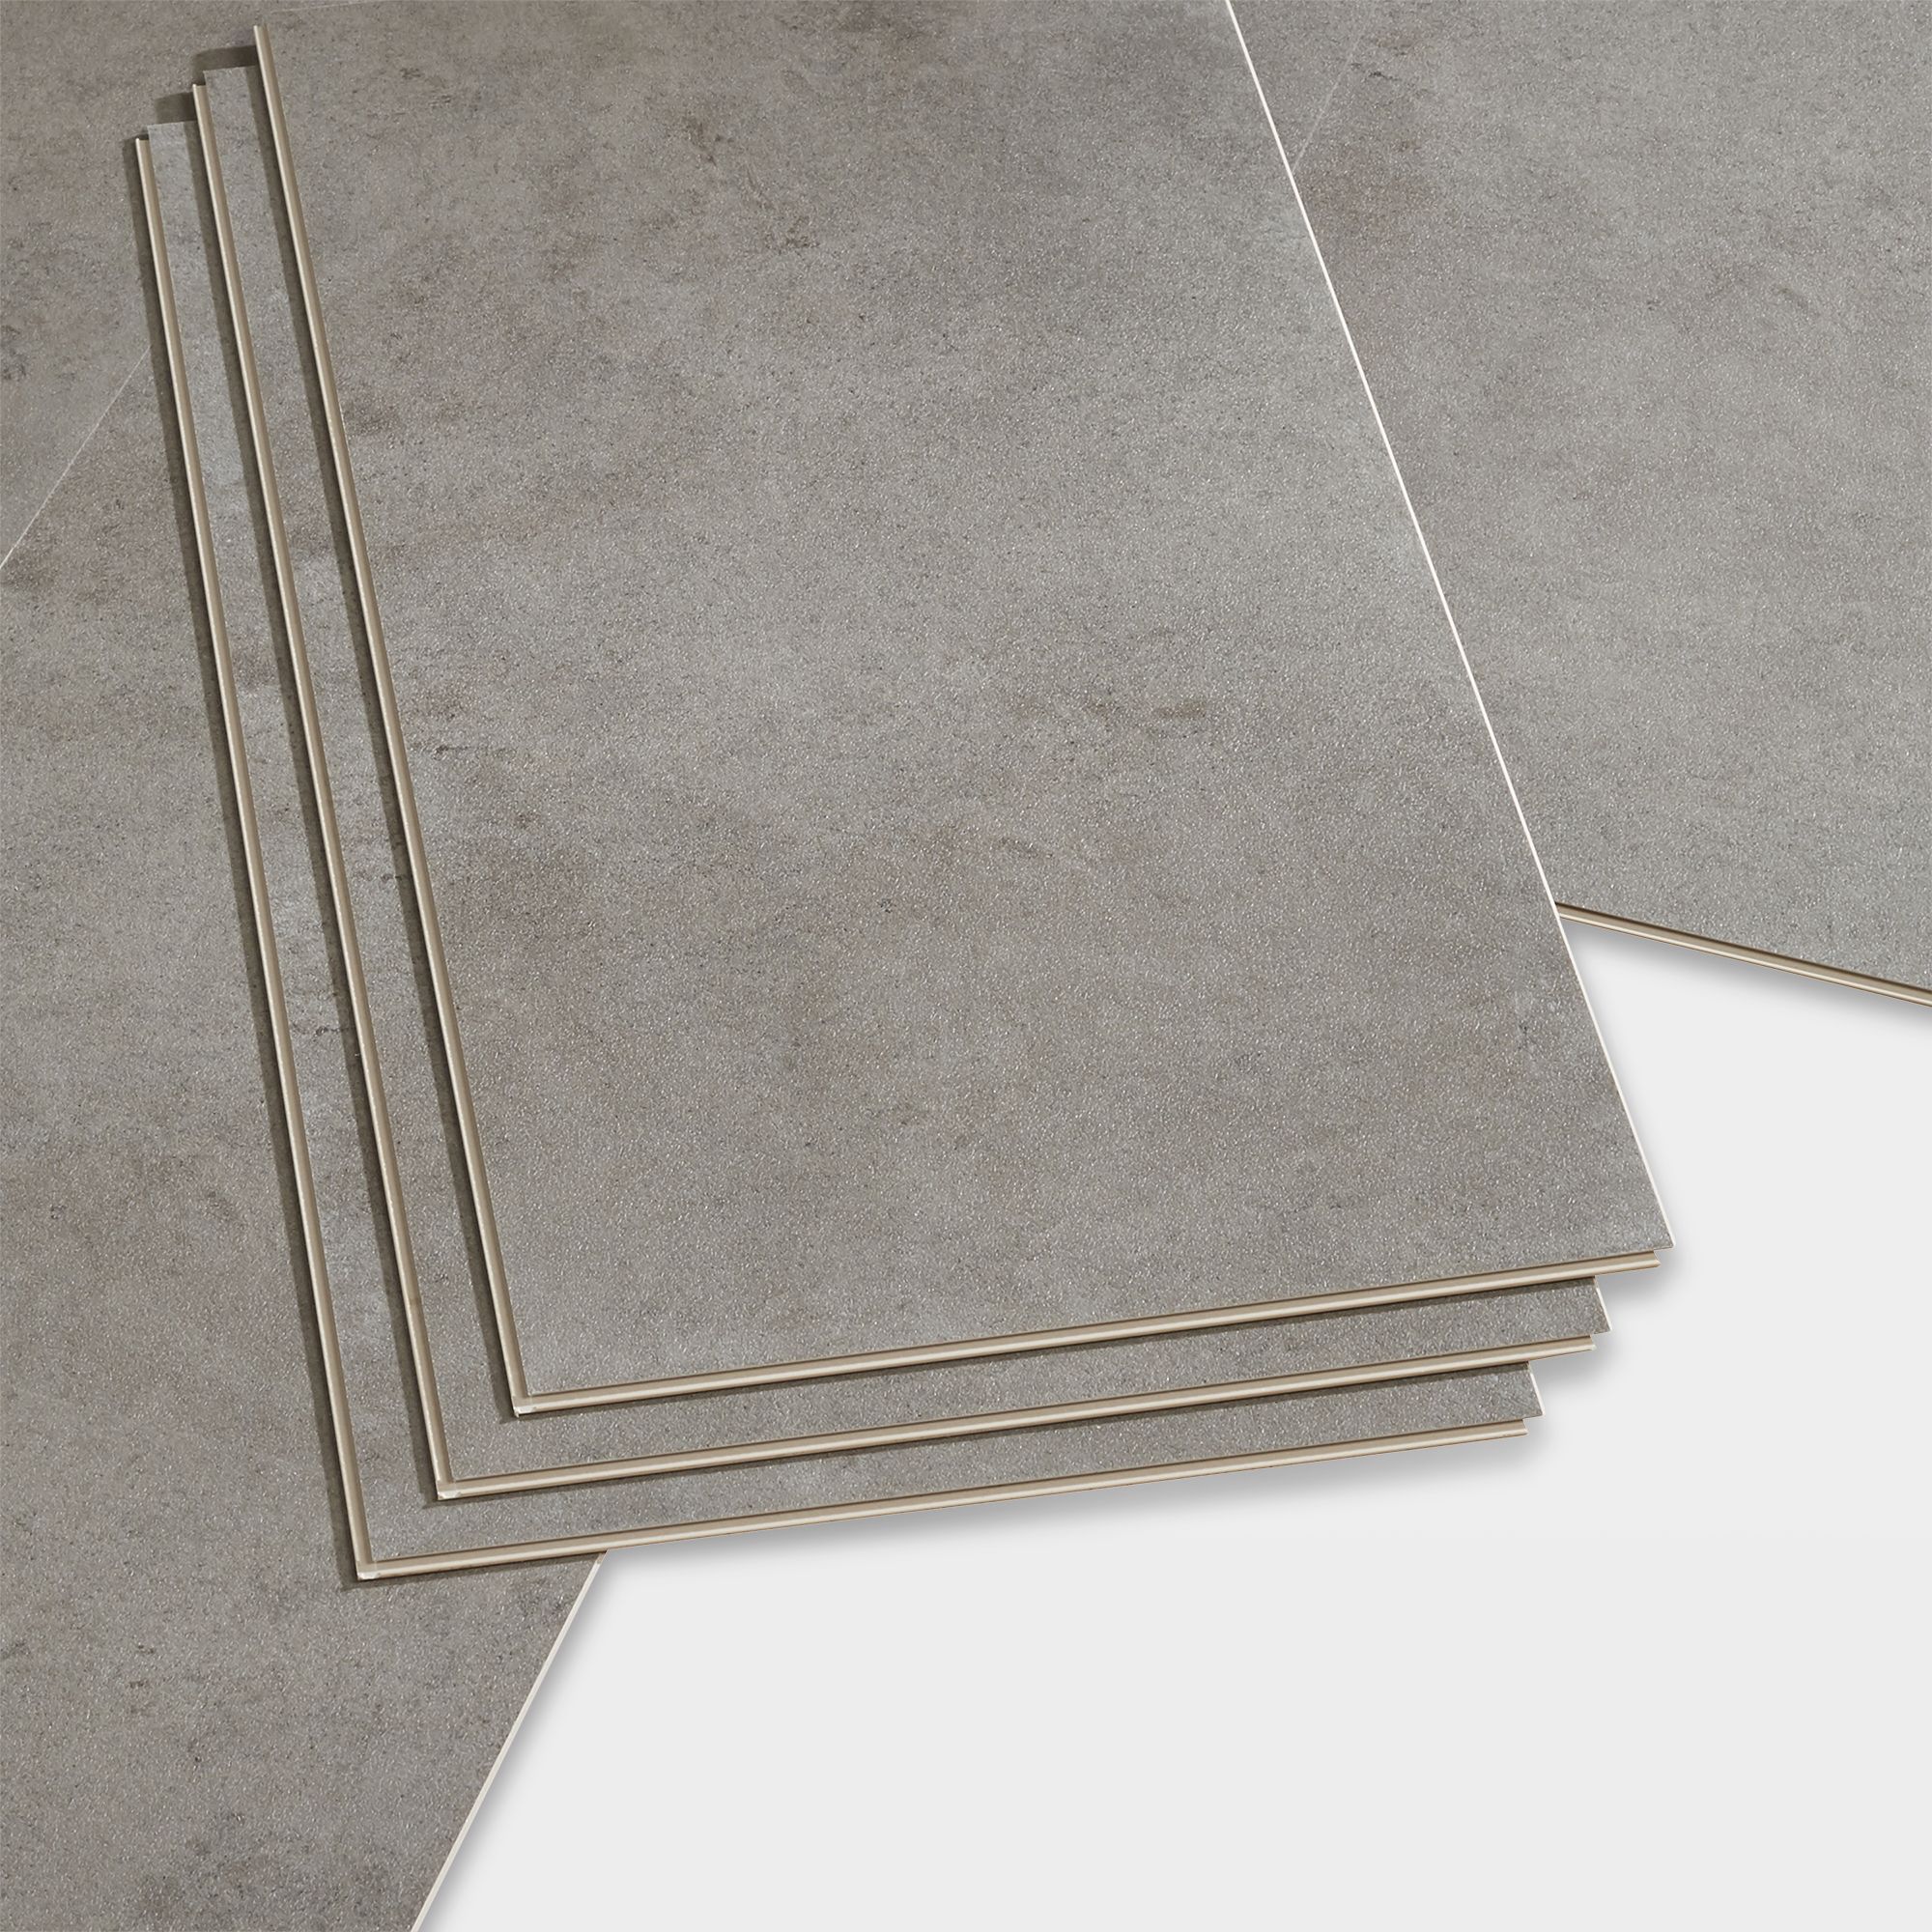 GoodHome Bachata Stone Grey Tile Effect Luxury Vinyl Click Flooring, 2.6M² Pack